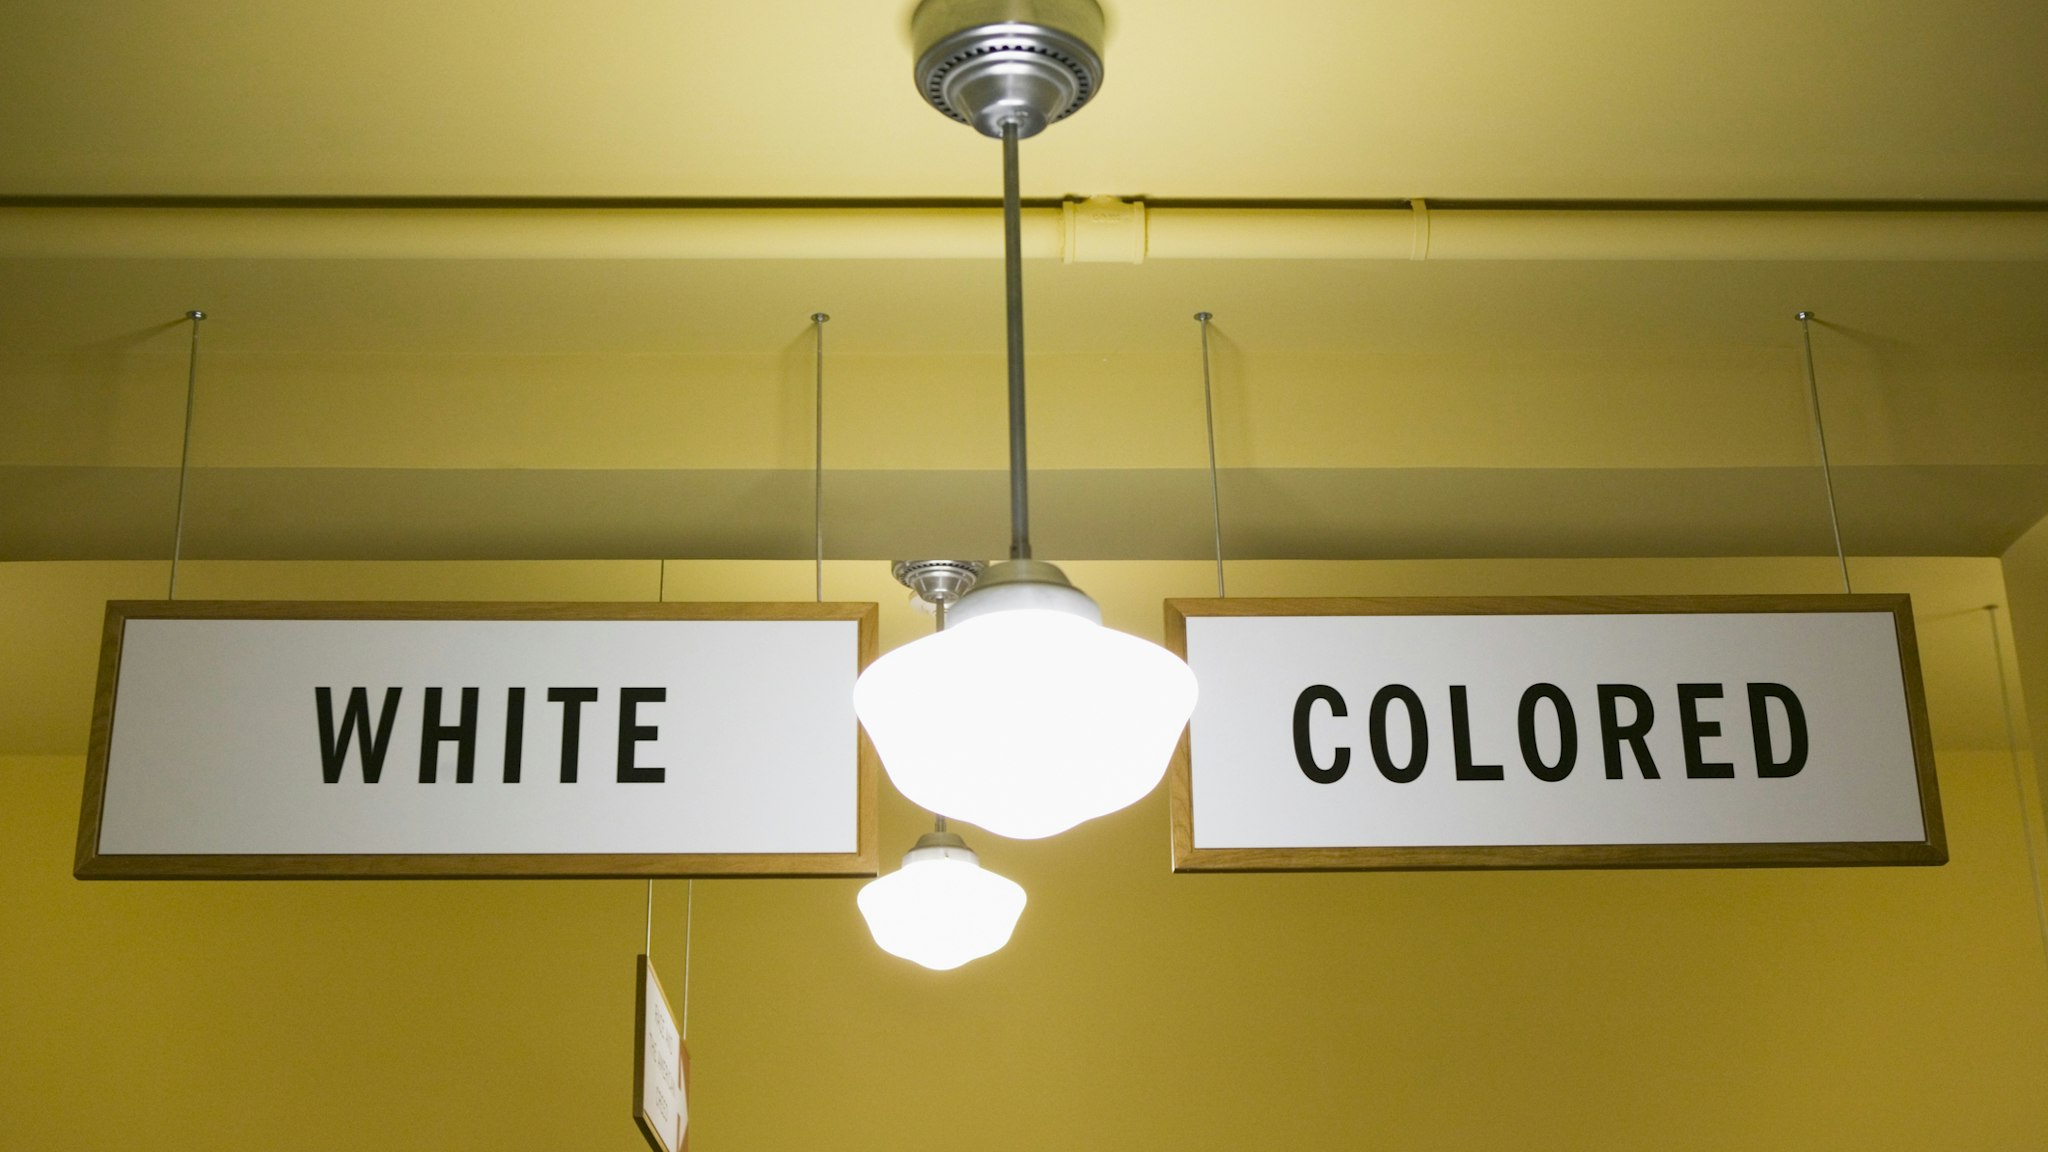 USA, Kansas, Topeka, White and Colored segregation signs - stock photo